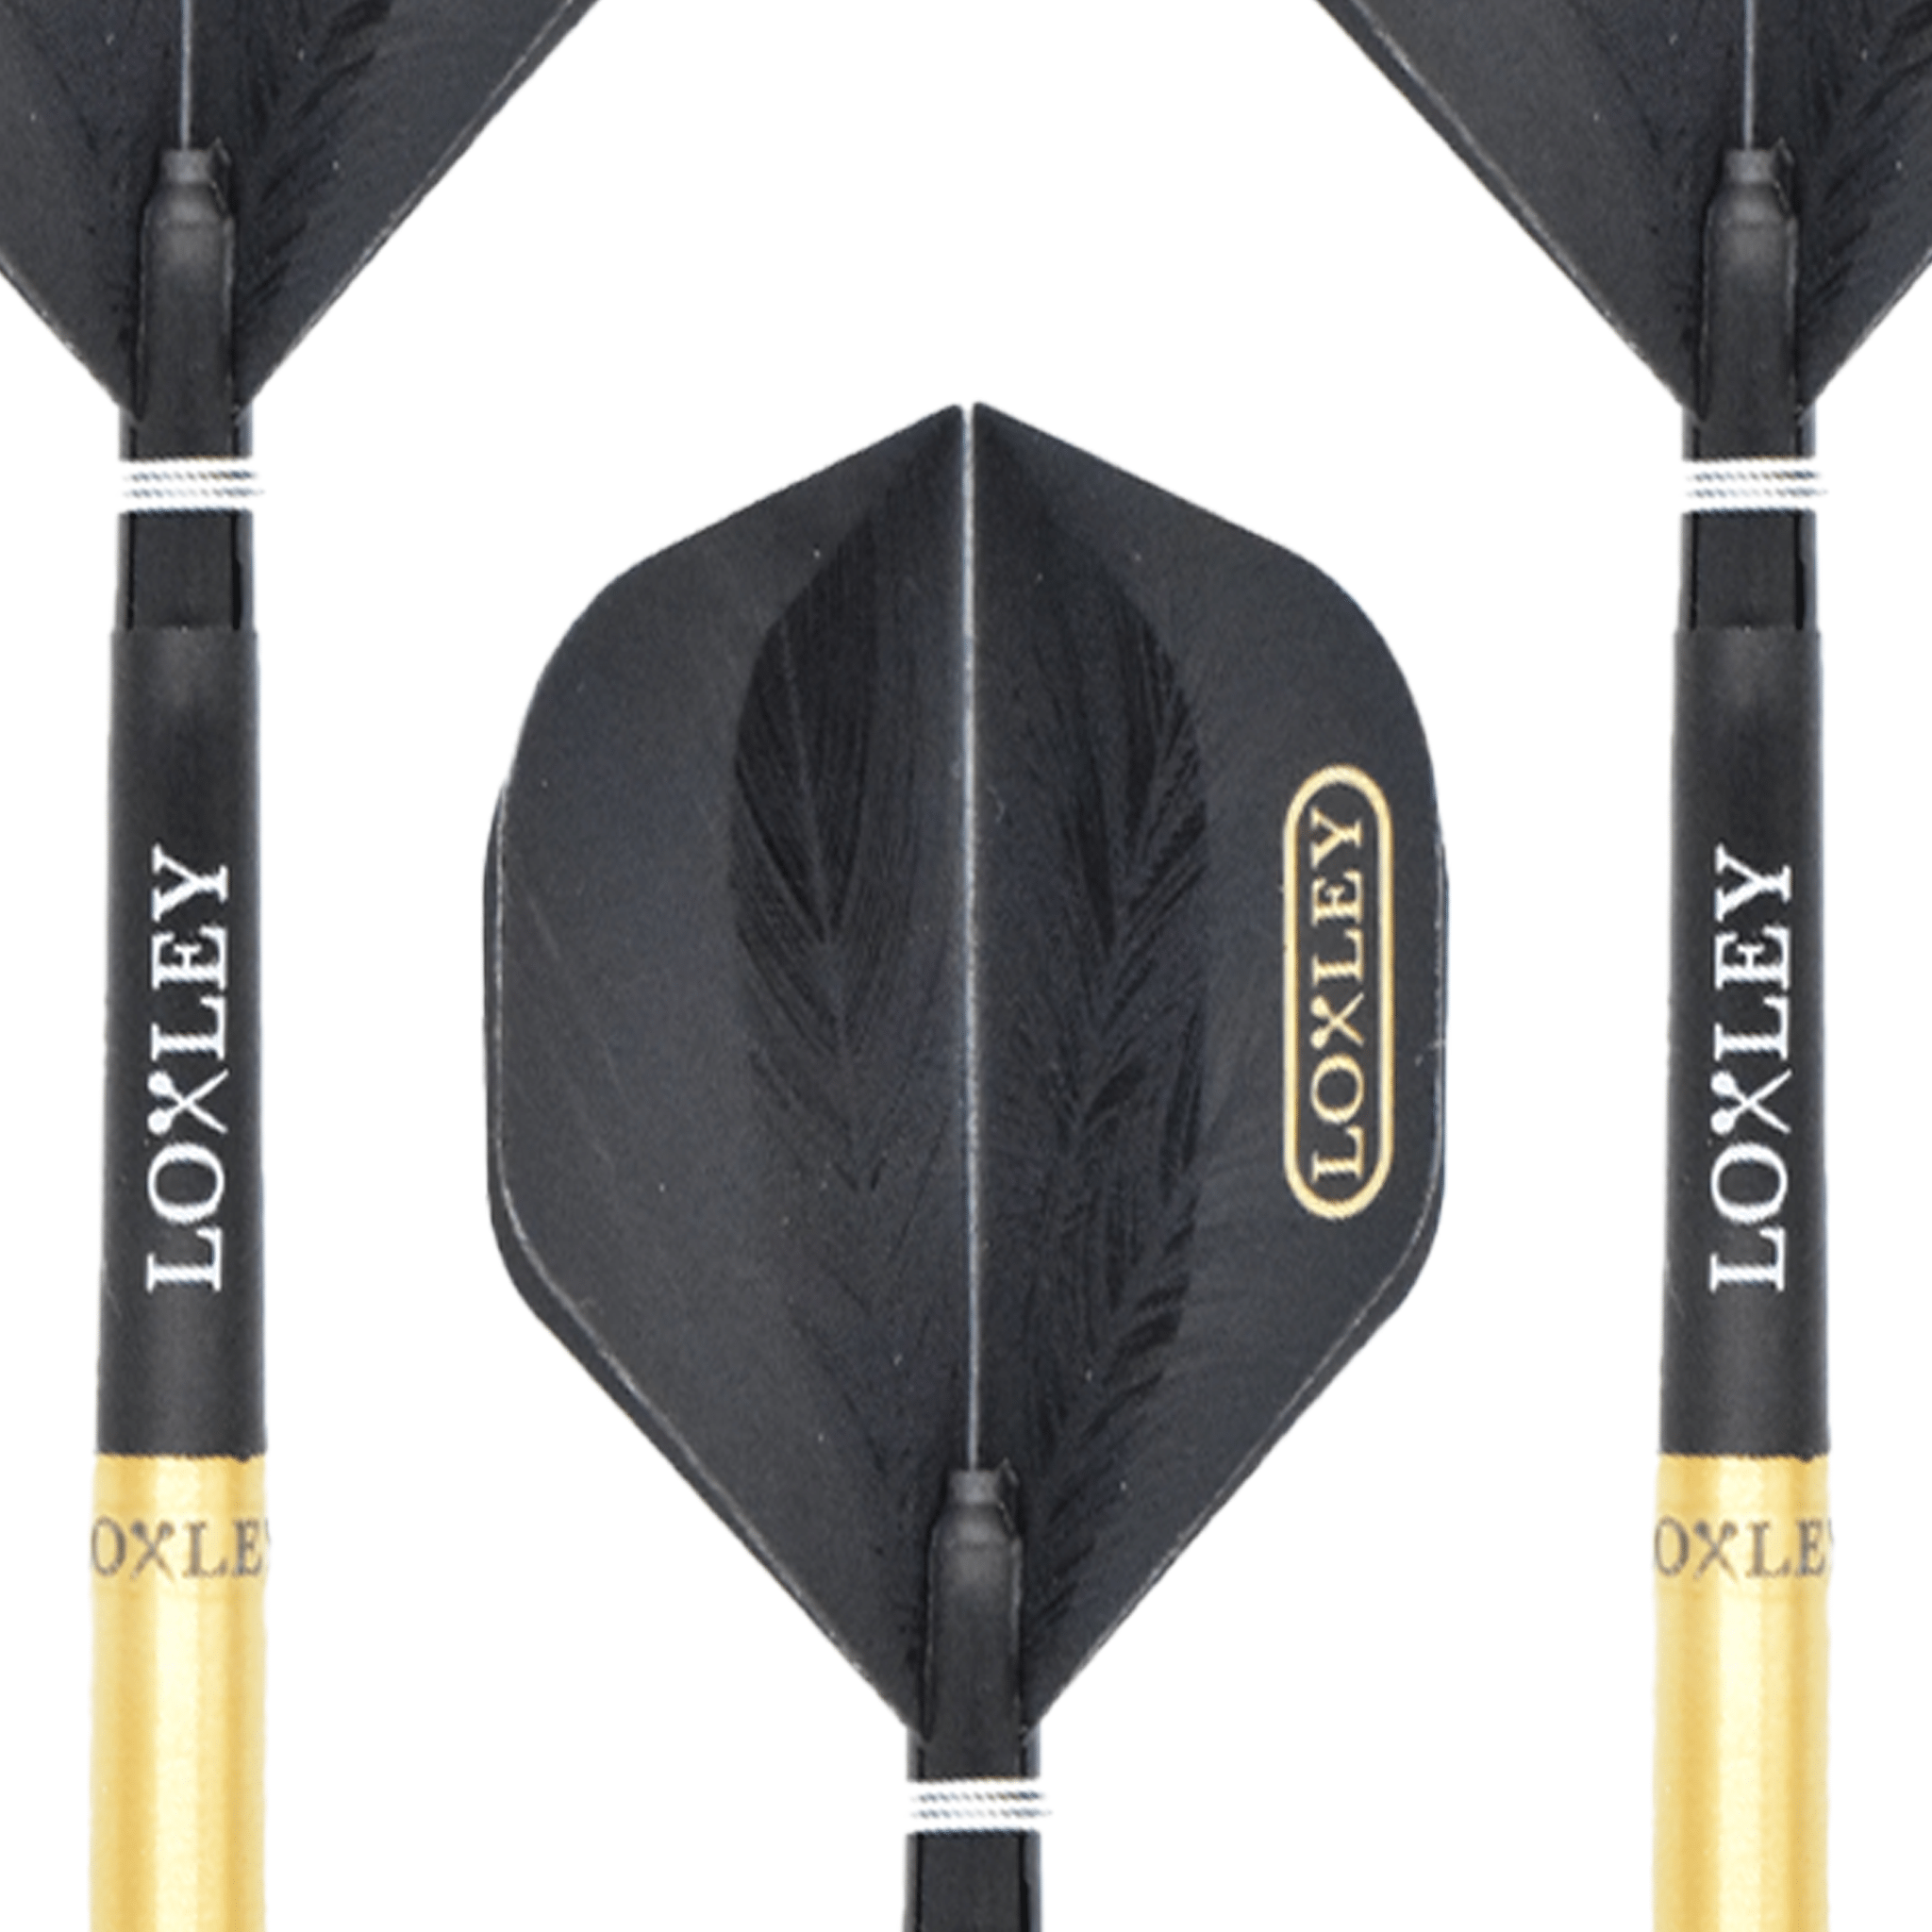 Loxley Robin MK I Gold - 90% Tungsten Steel Tip Darts Darts